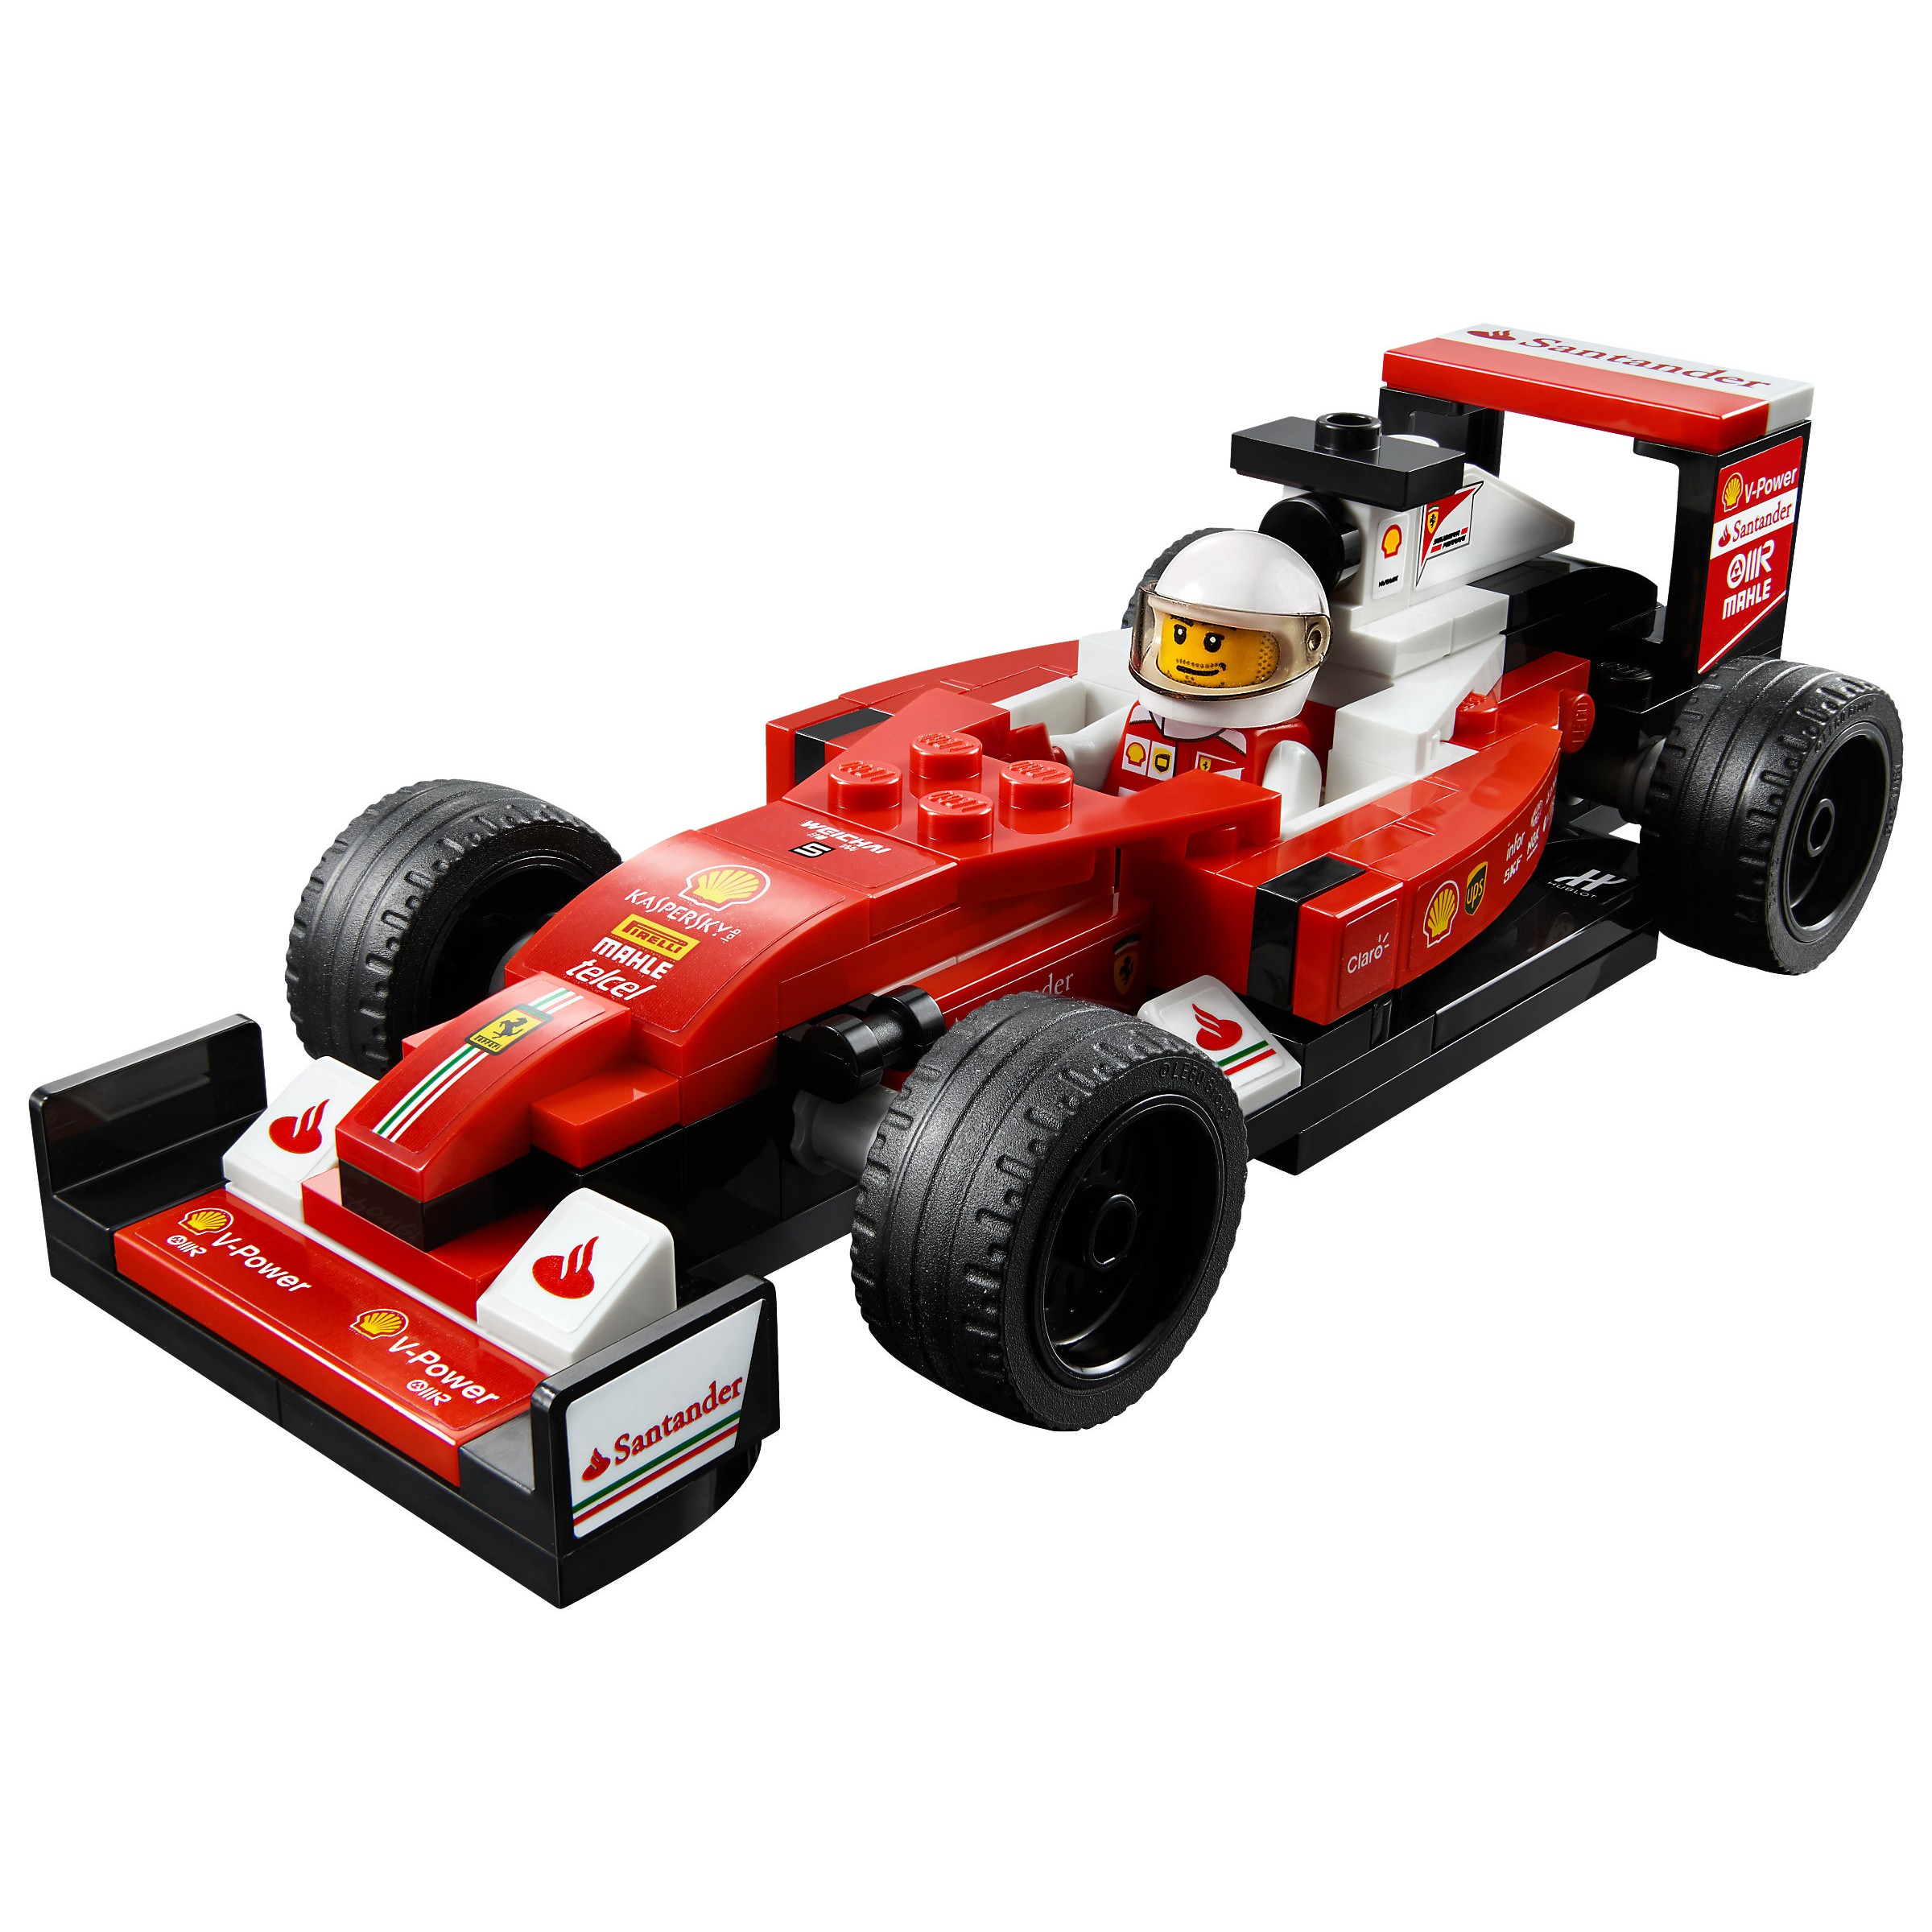 Lego Speed Champions 75879 Scuderia Ferrari SF16-H